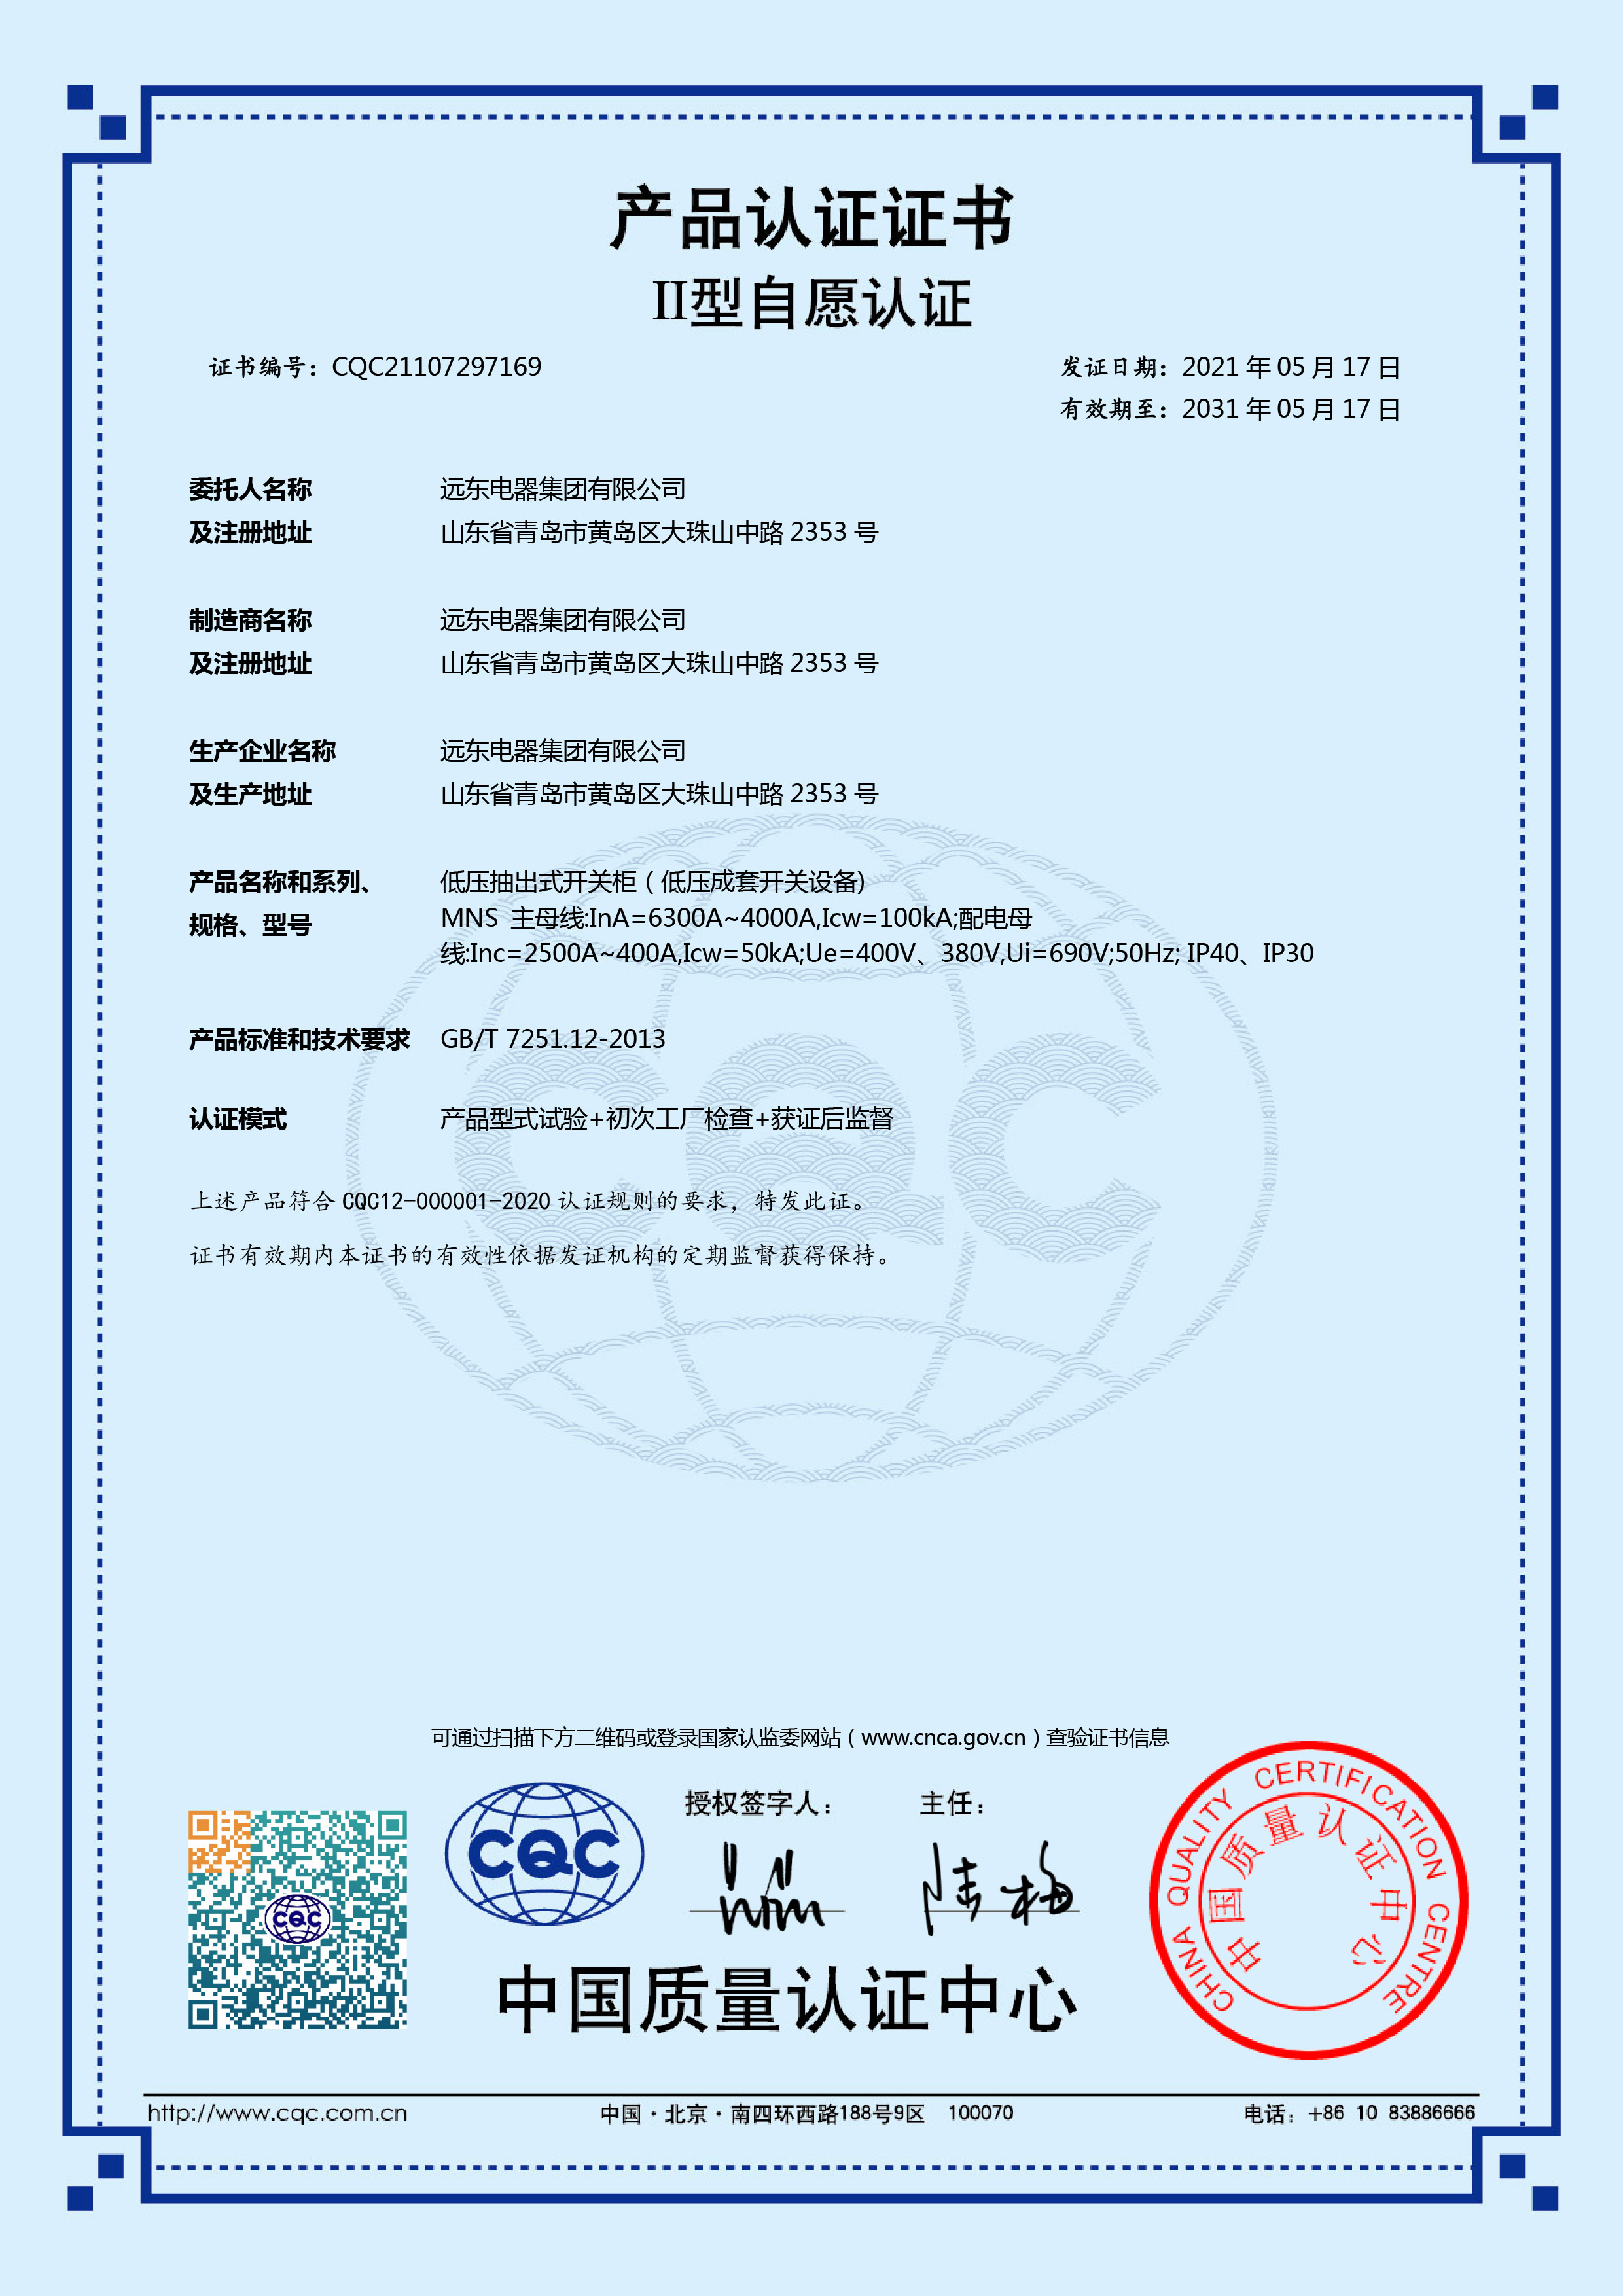 MNS 6300A-4000ACQC产品认证证书.jpg